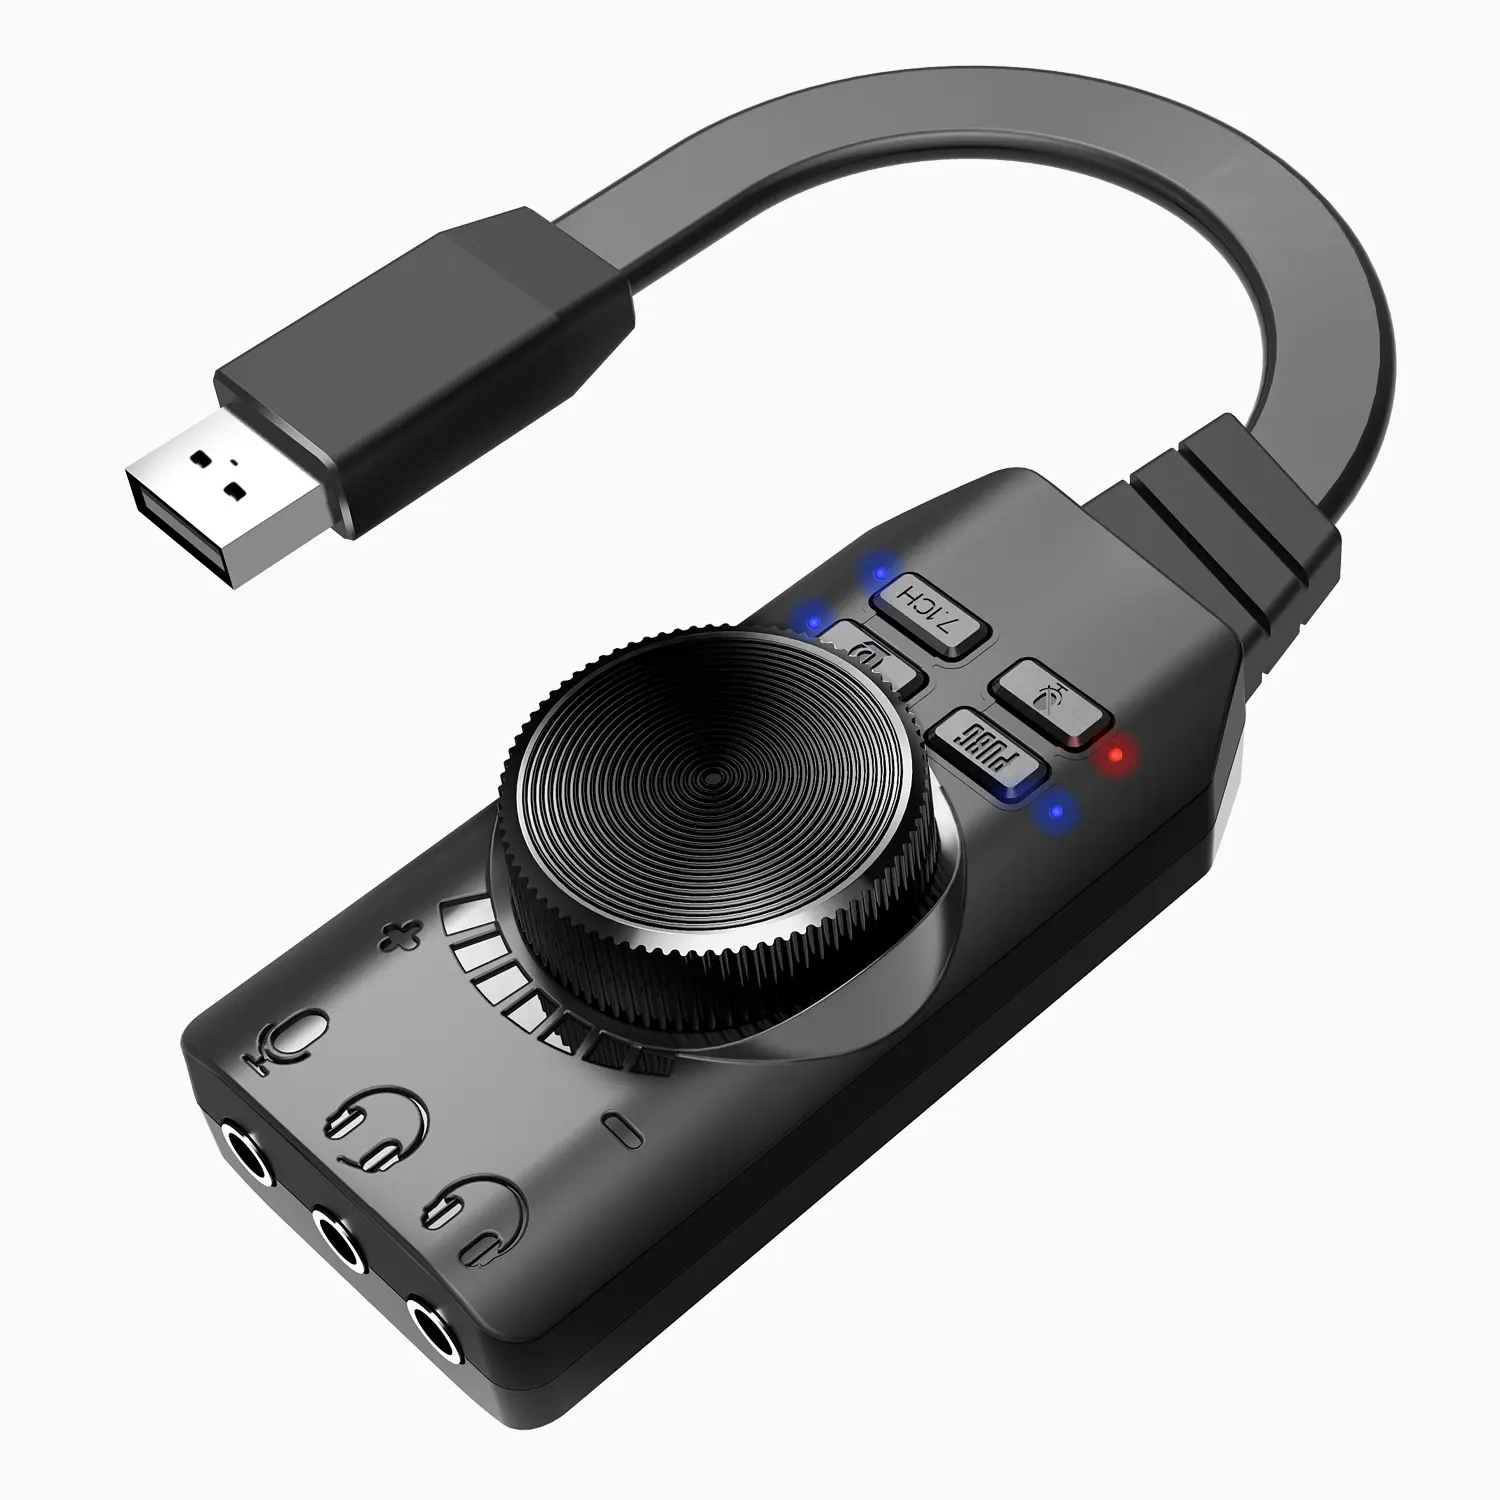 Scheda audio USB Plextone scheda audio esterna a canale virtuale 7.1 per PC Laptop GS3